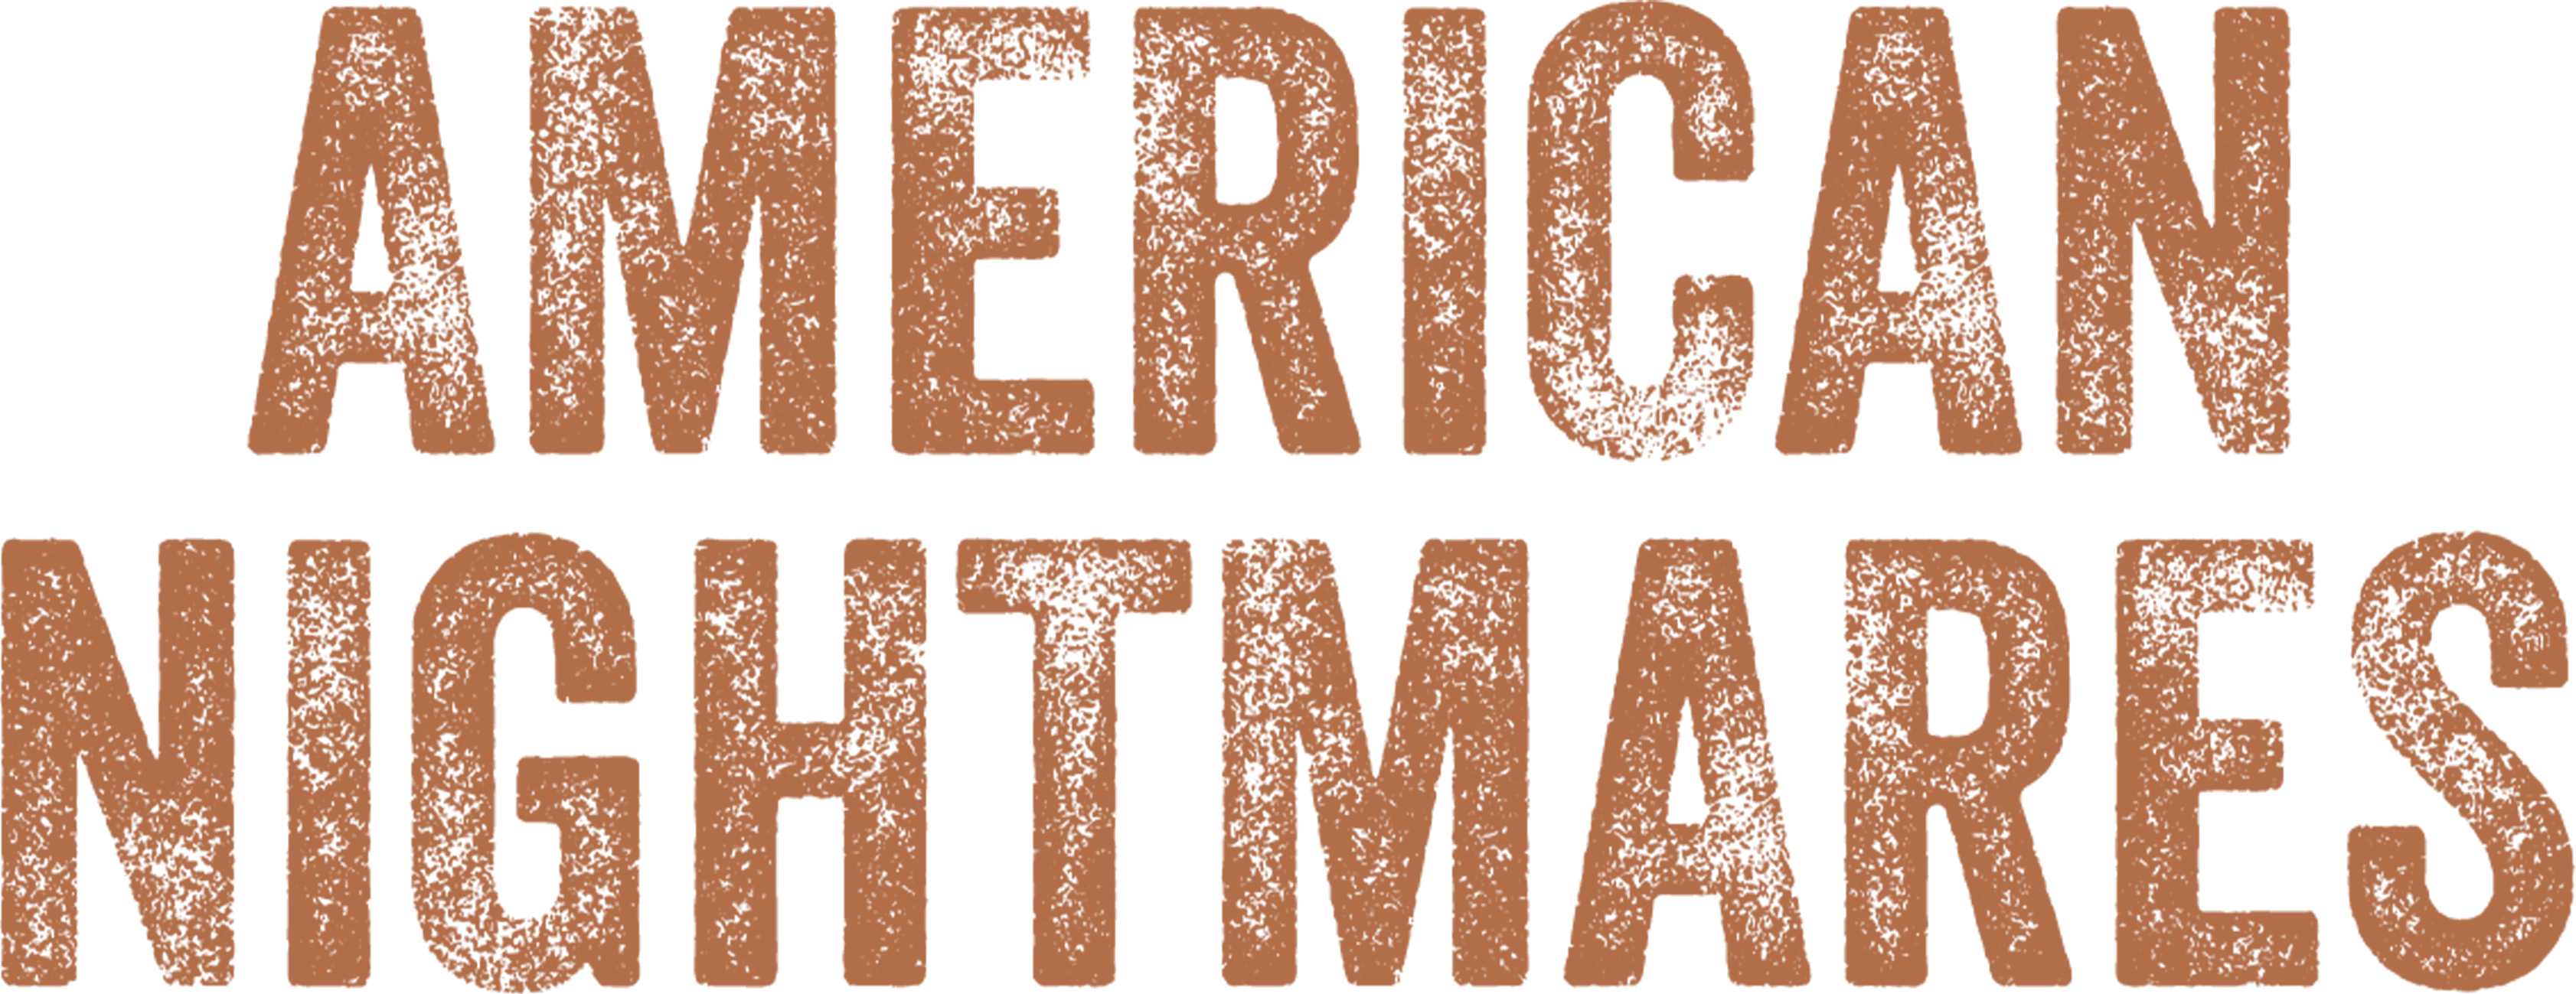 American Nightmares logo